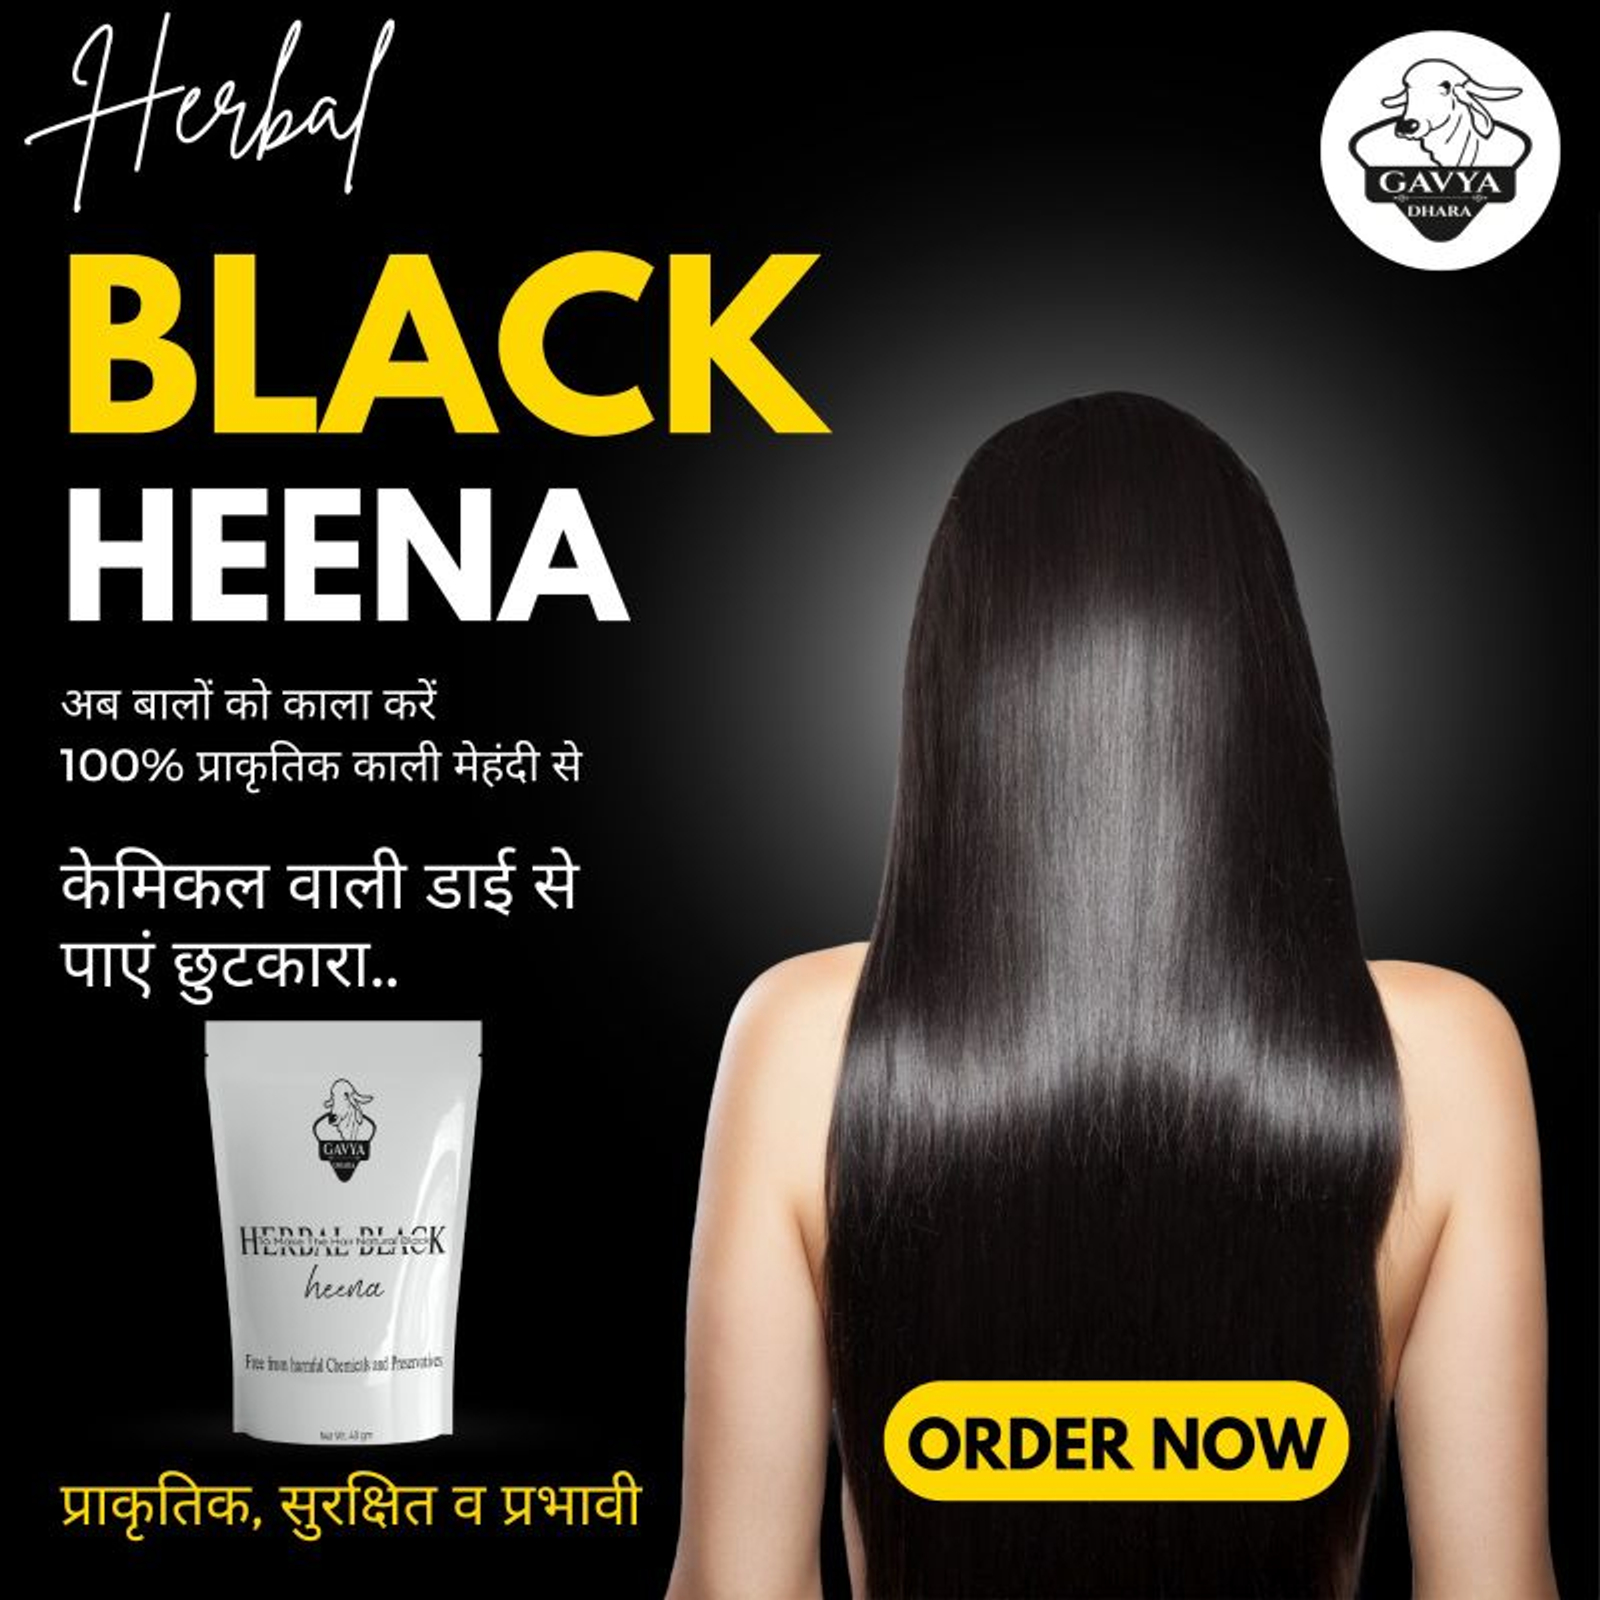 GAVYADHARA Herbal Black Heena (Natural Hair Dye) - 40gm